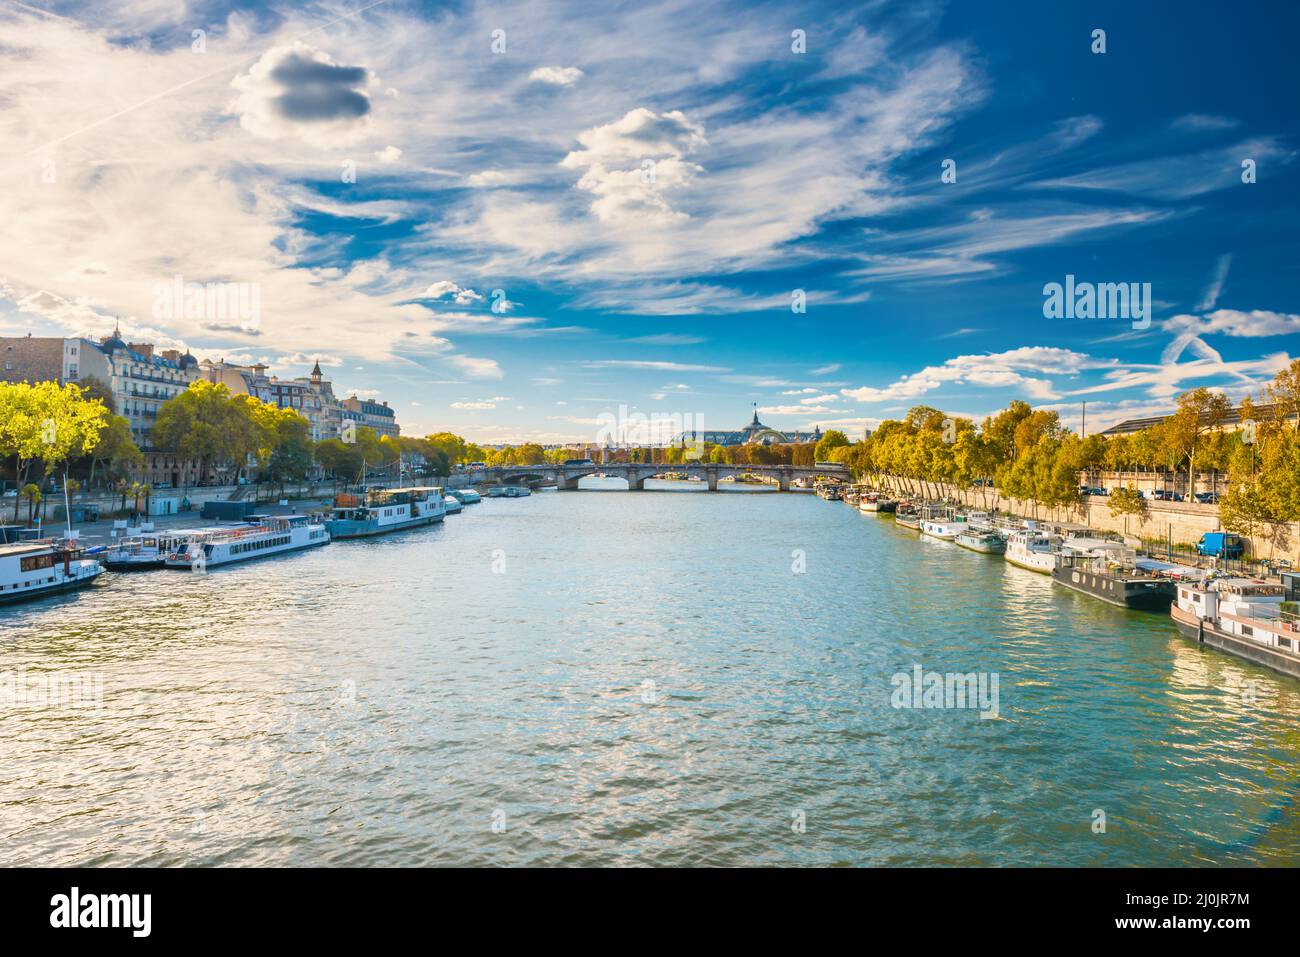 Paris cityscape with view over Seine river Stock Photo